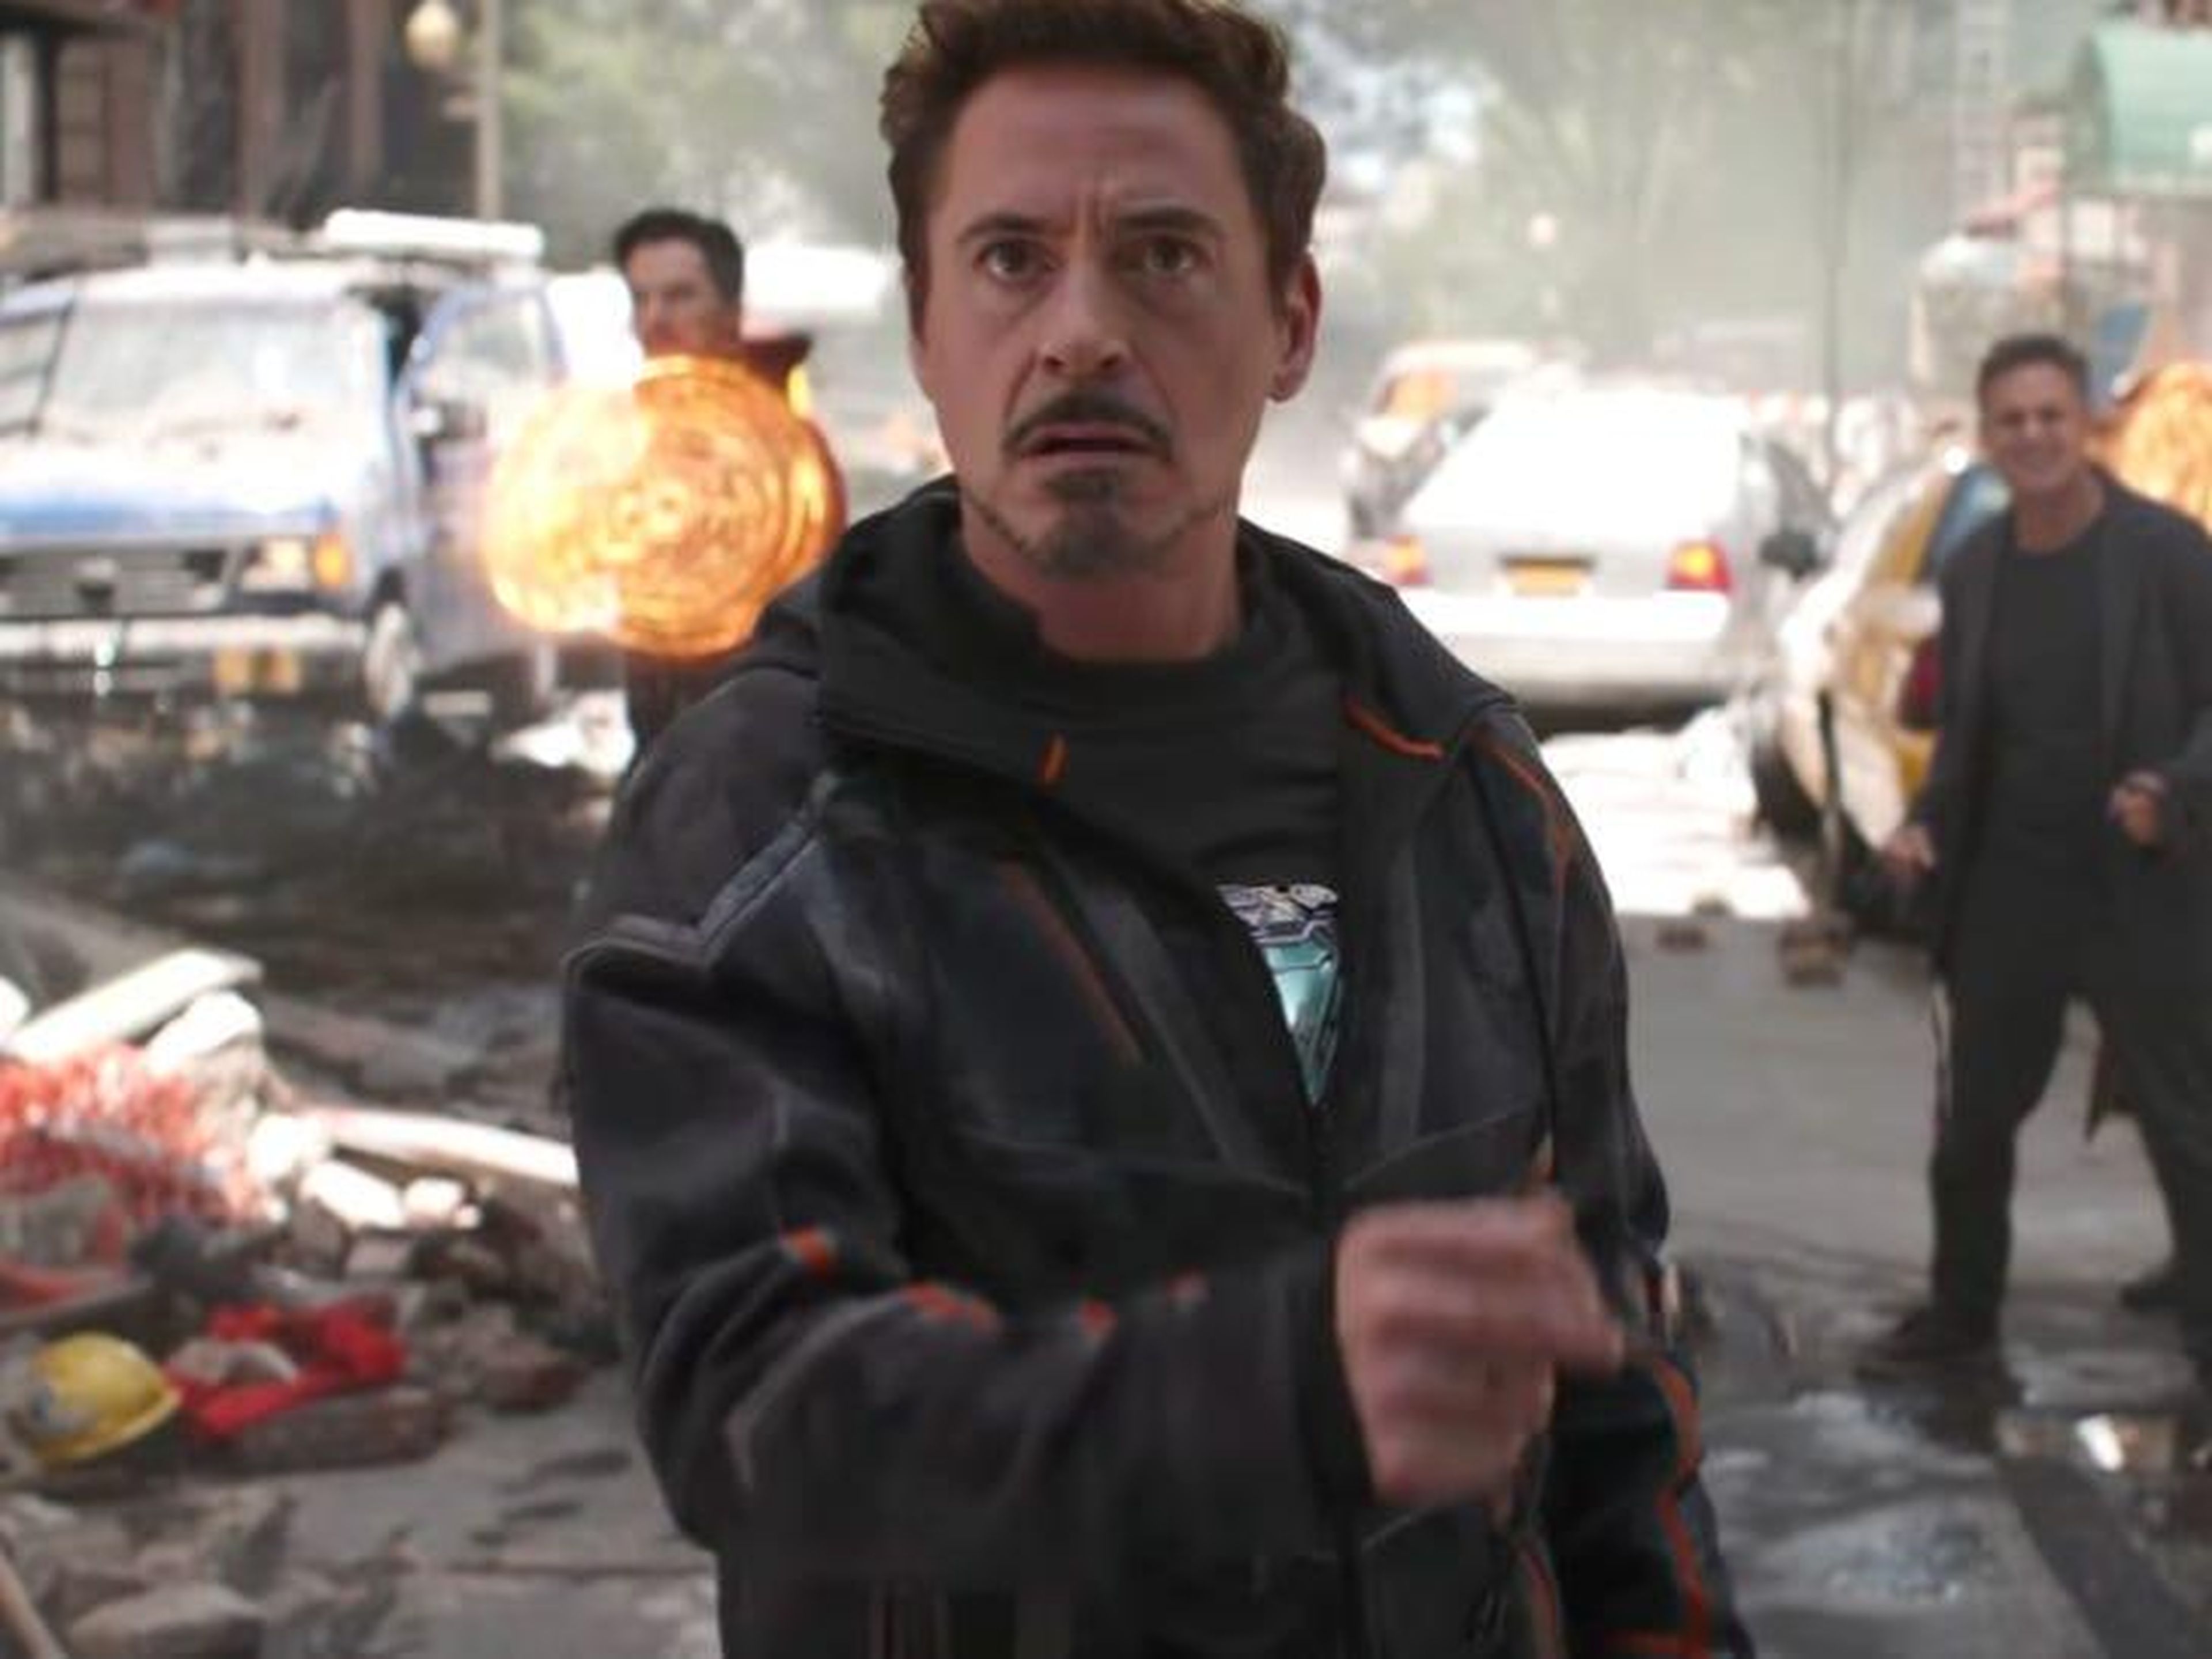 4. Robert Downey Jr. as Tony Stark/Iron Man in "Avengers: Infinity War"